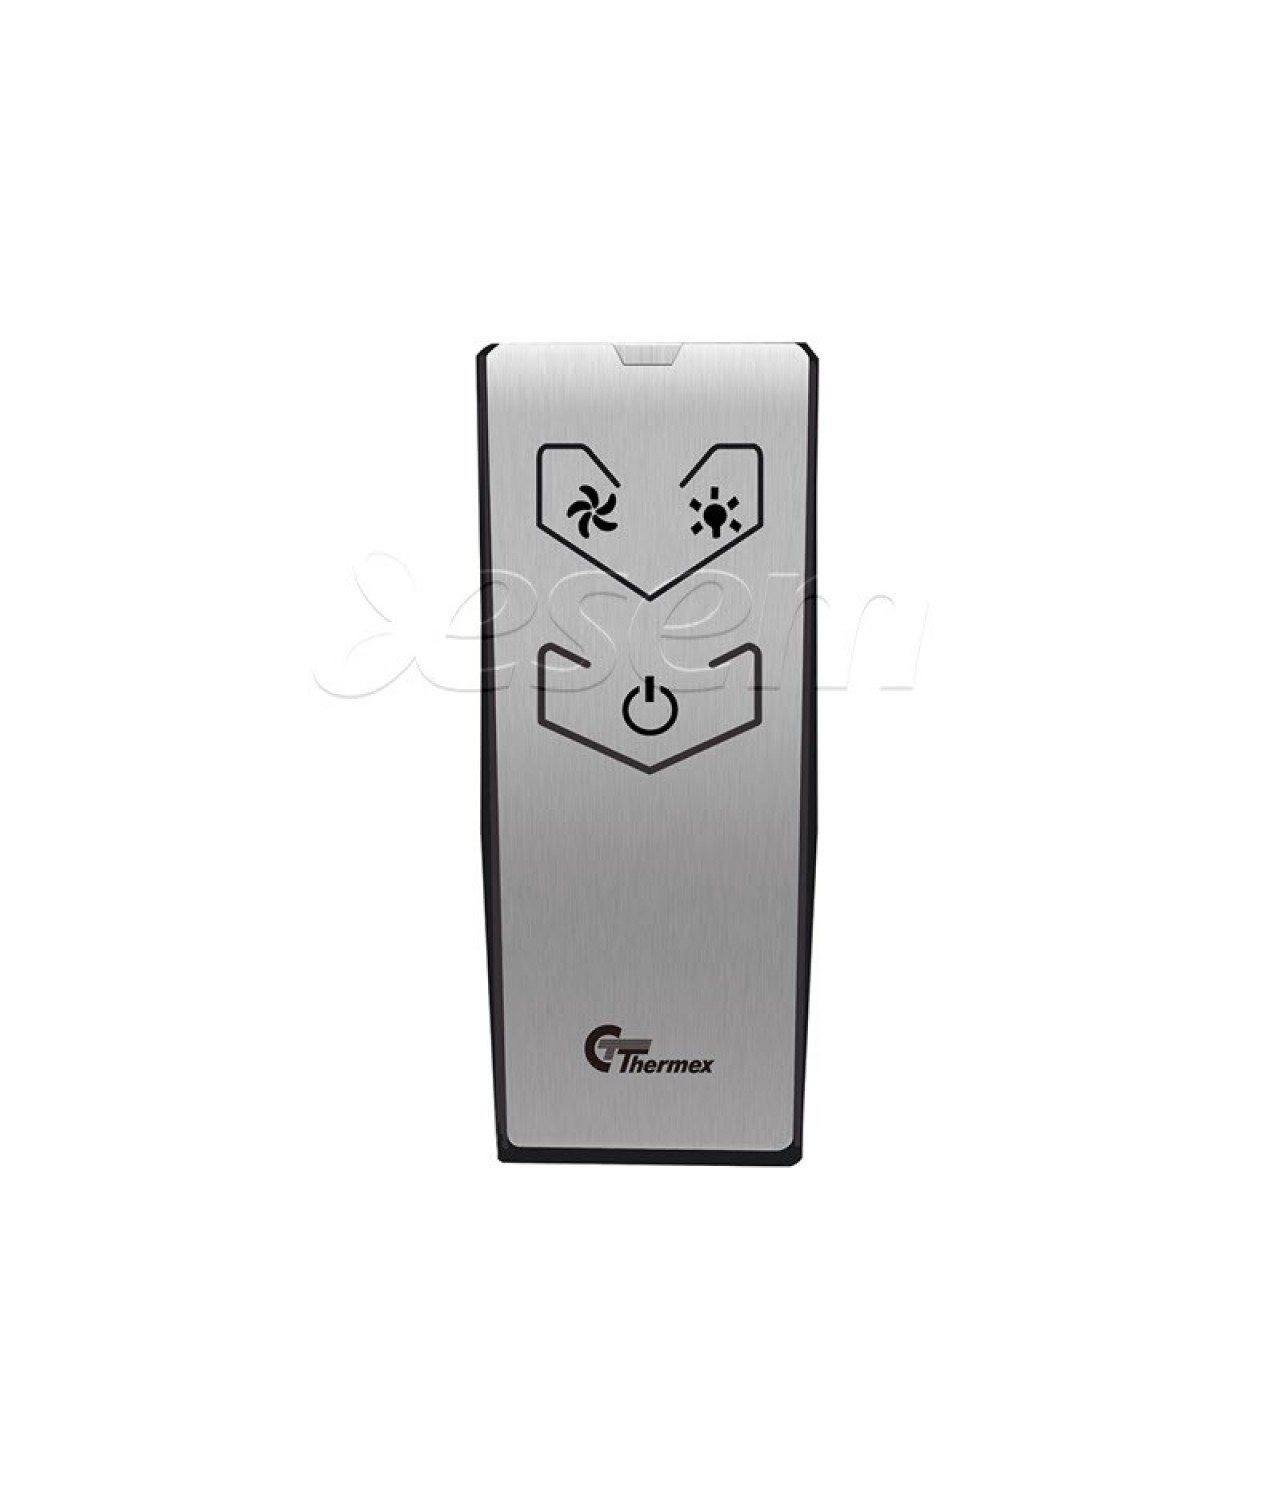 Coocker hood Green air remote control